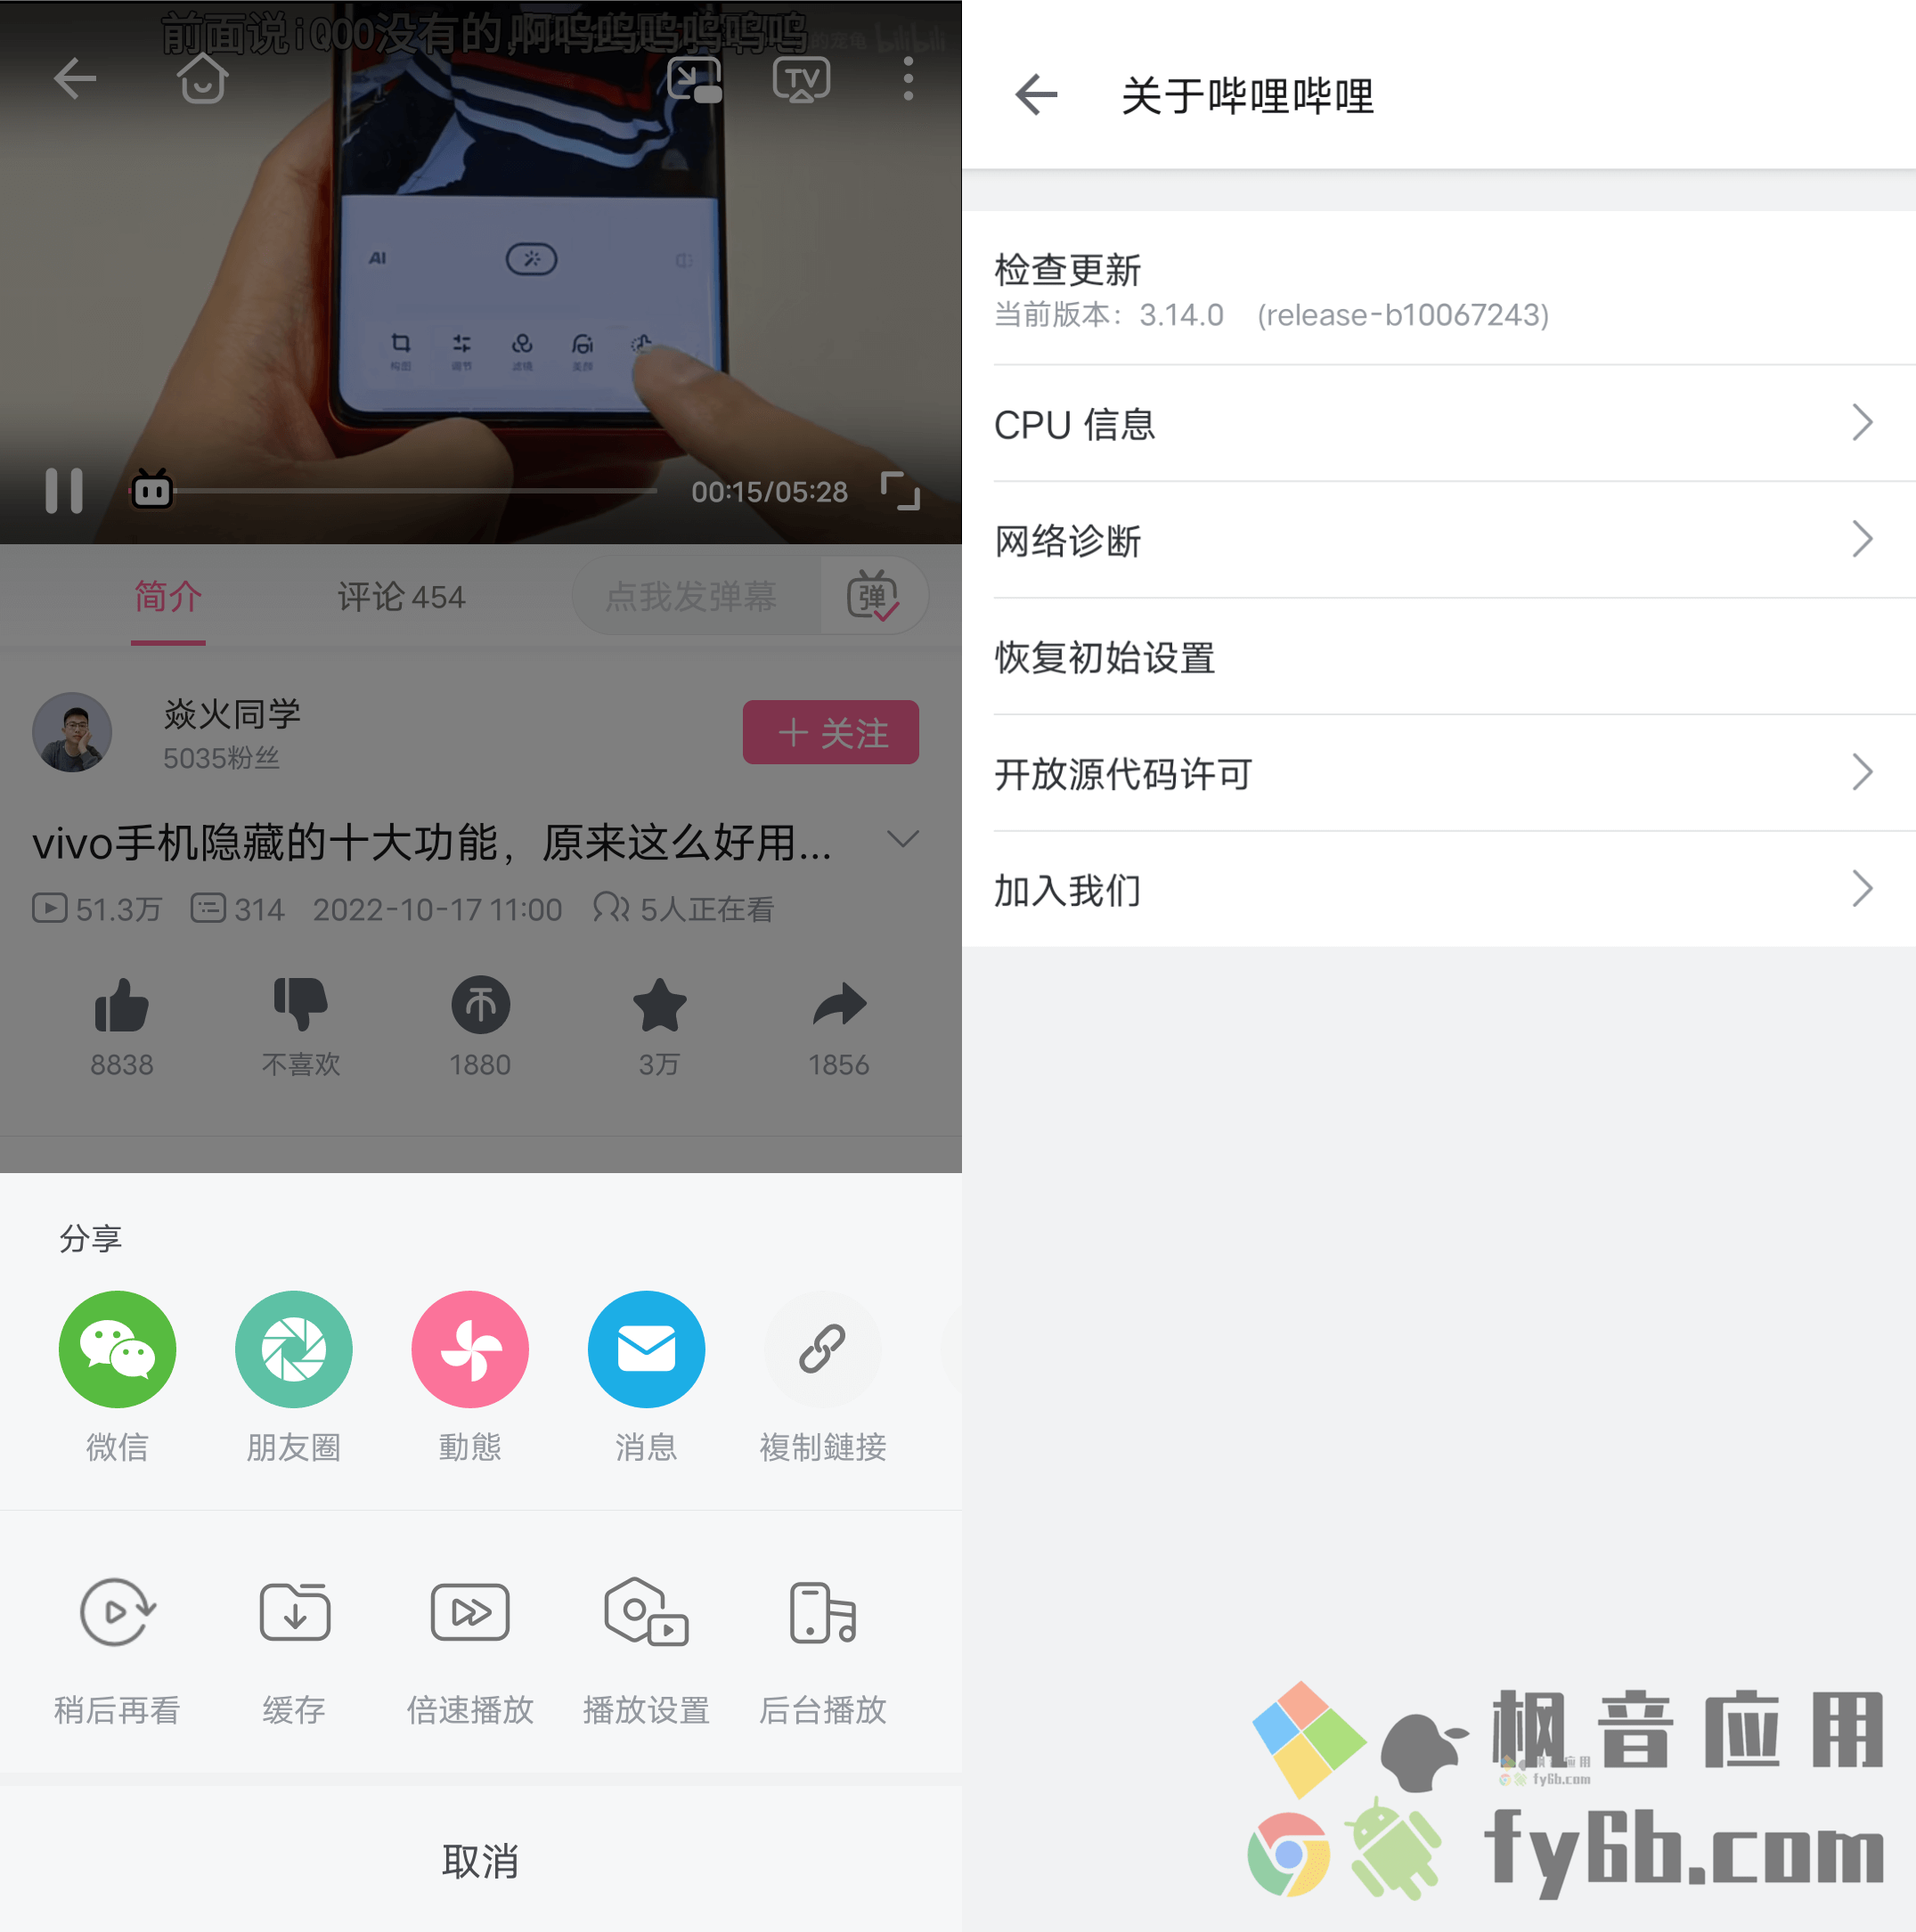 Android bilibili 哔哩哔哩_v3.14.0 Google Play版